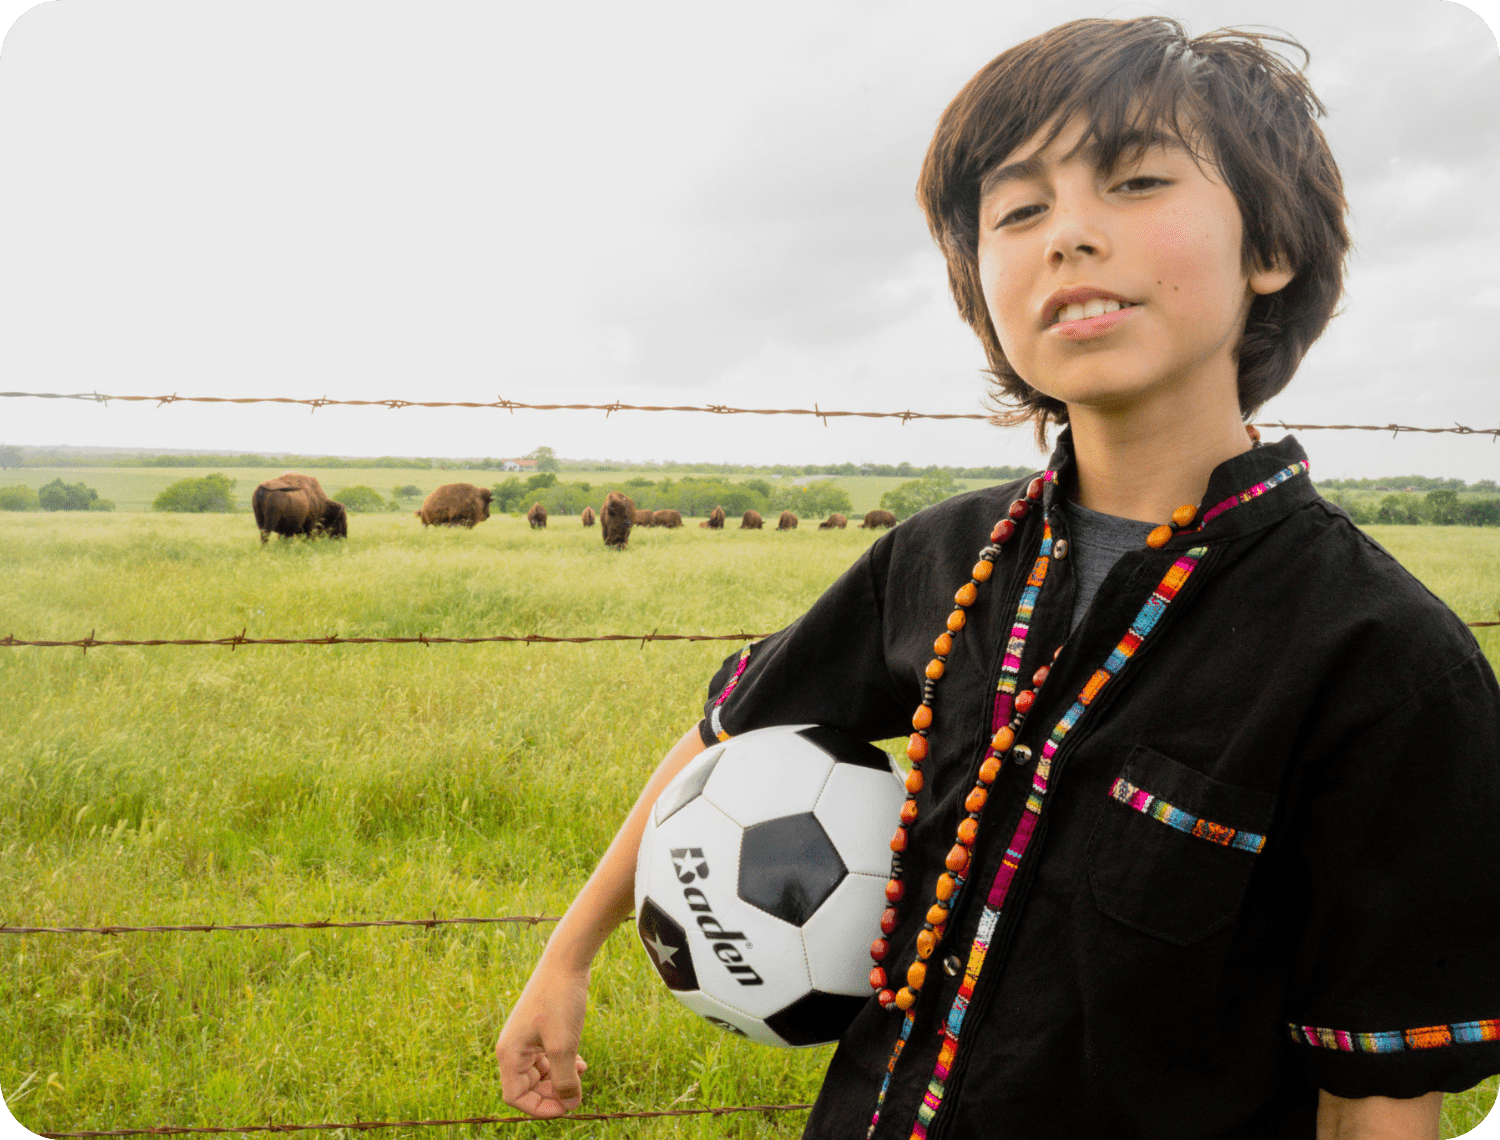 Dmitri posing, buffalo in background